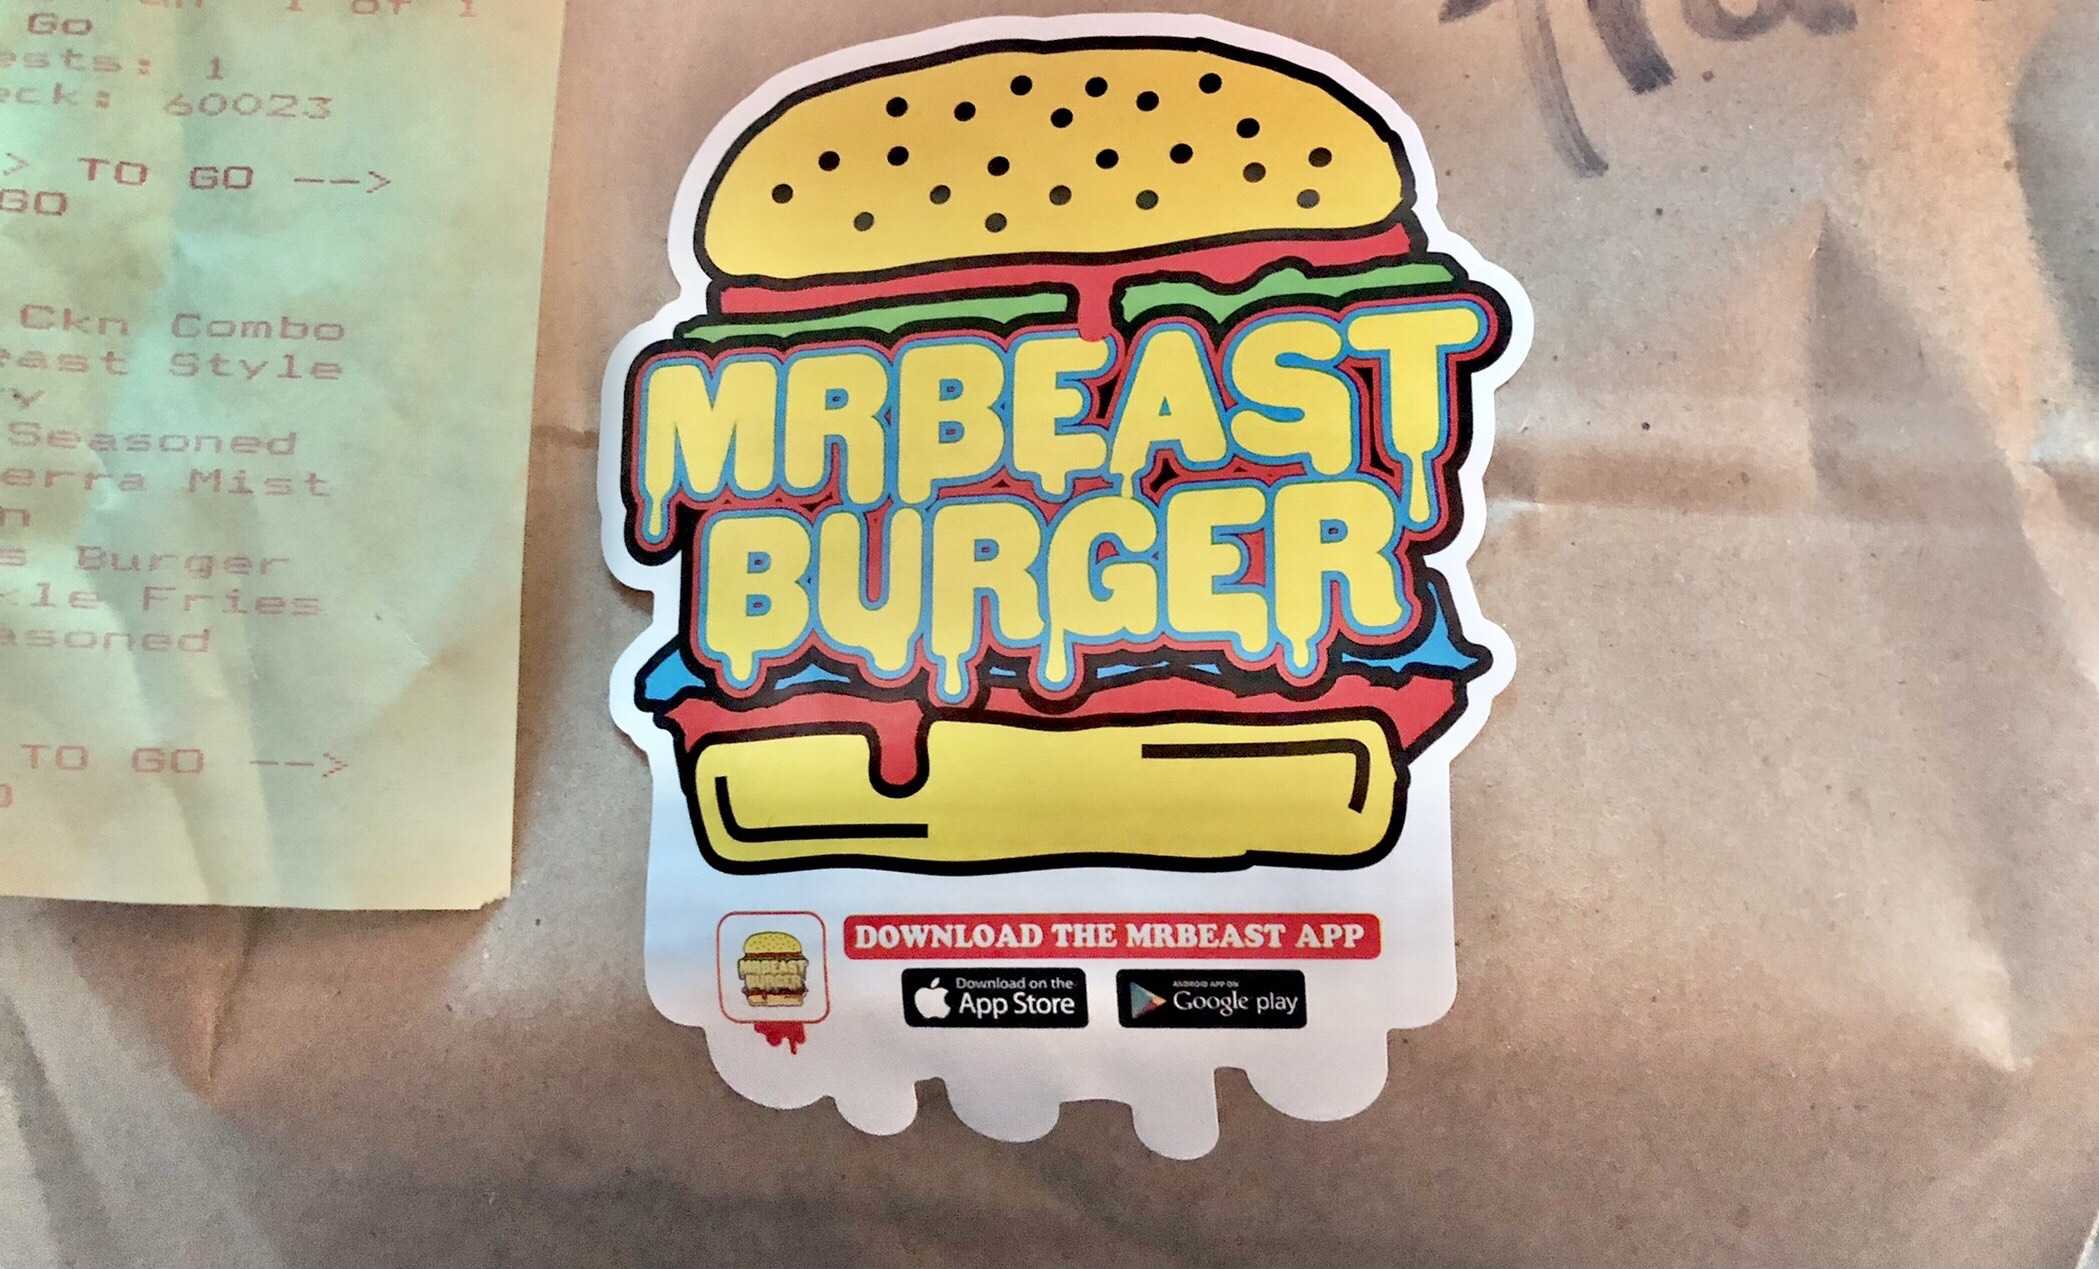 Pandemic eats: The MrBeast Burger